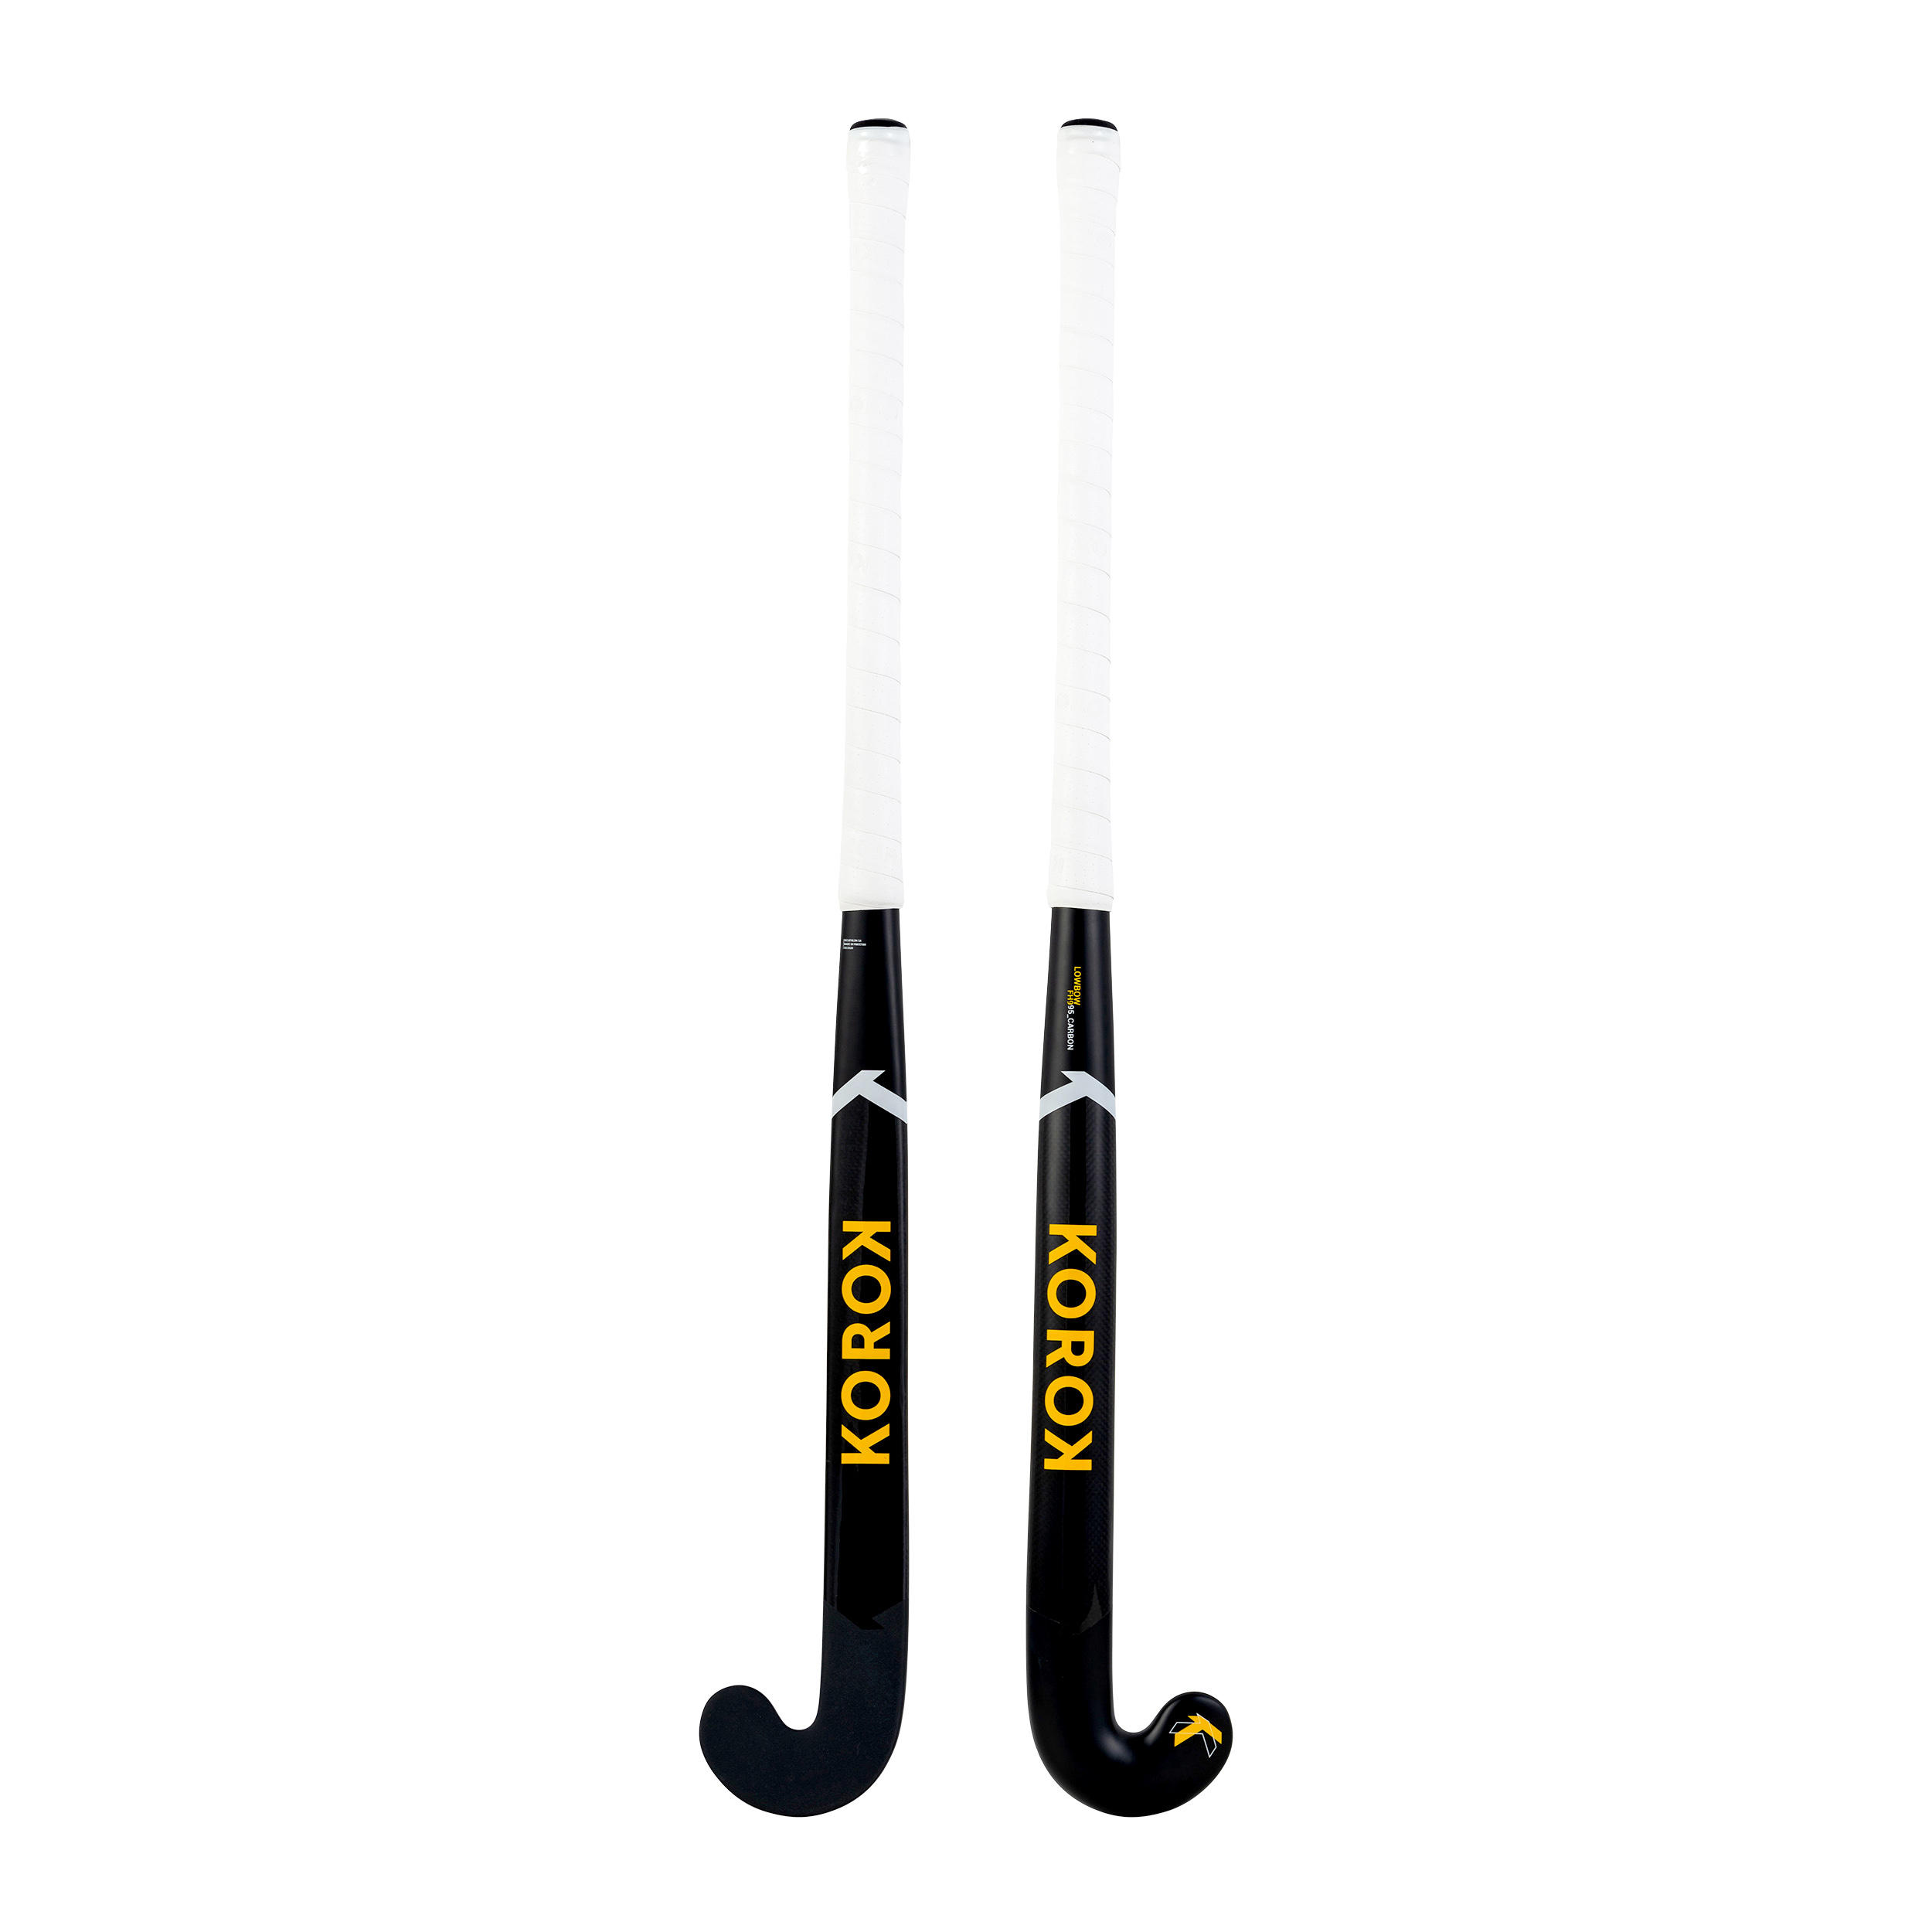 Adult Field Hockey Advanced 95% Carbon Low Bow Stick FH995 - Black/Orange 6/12